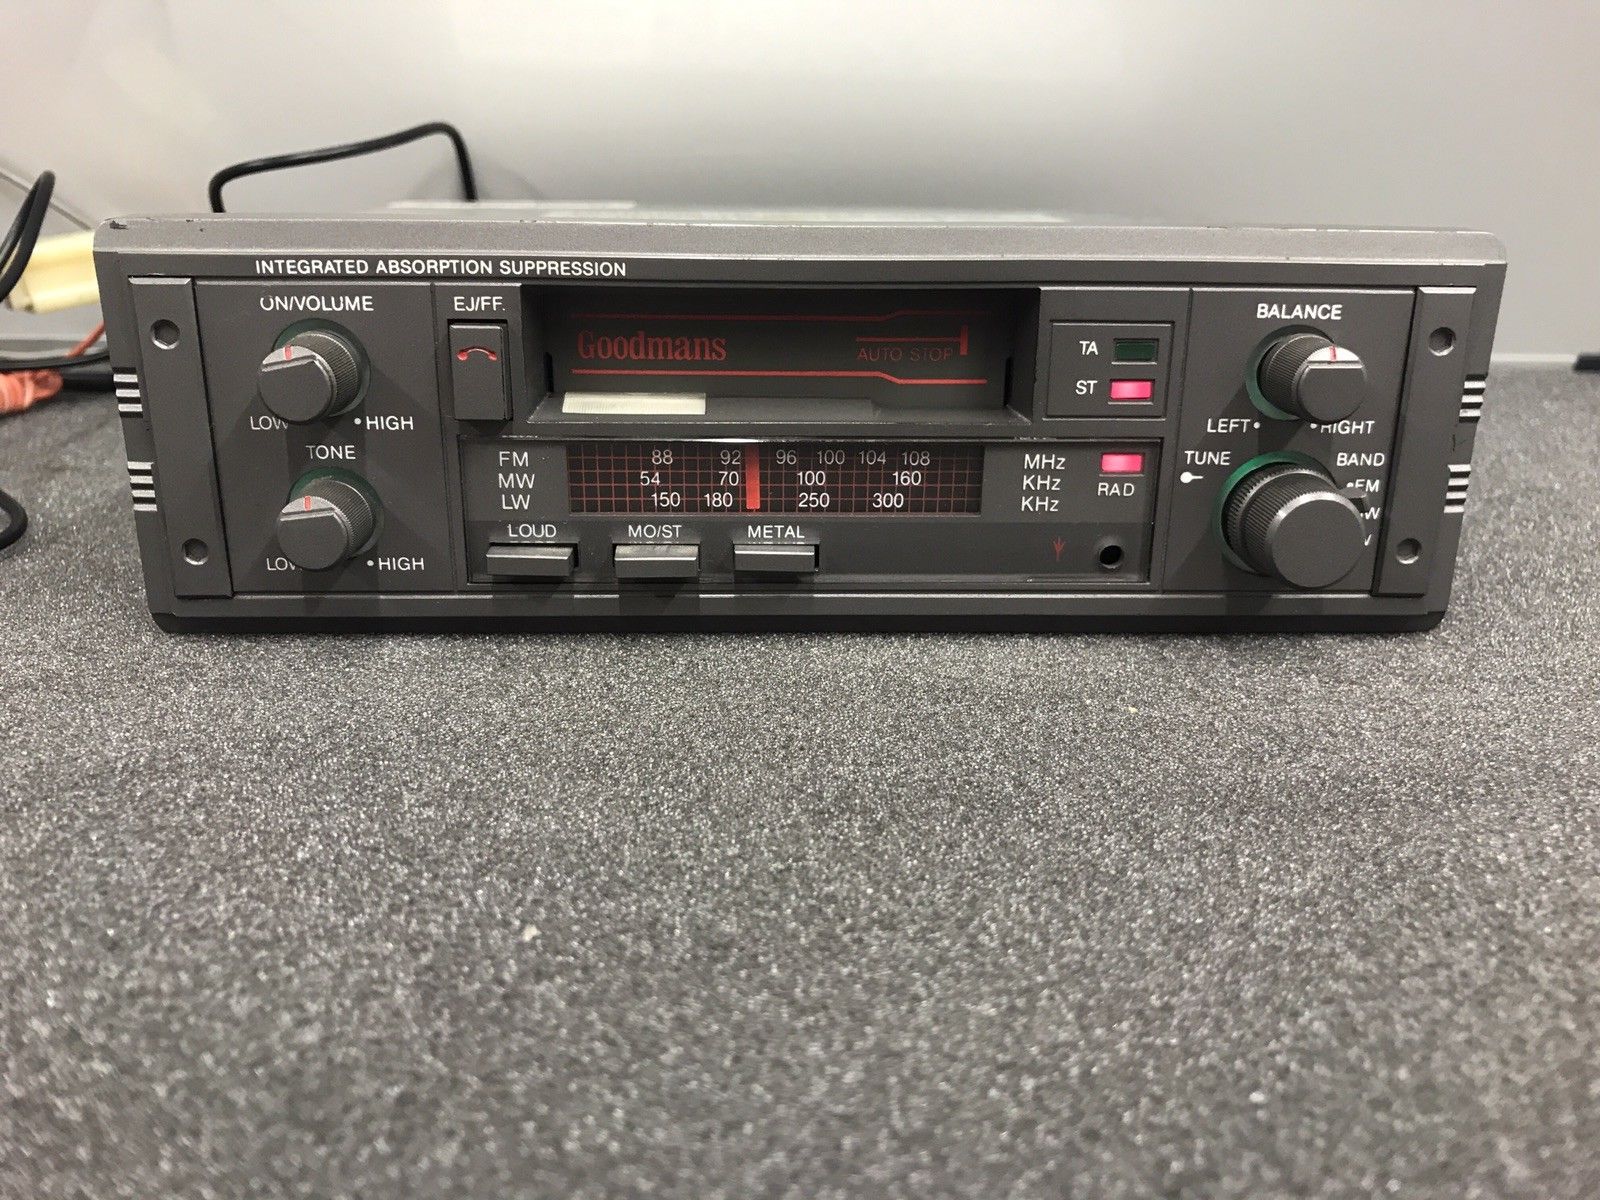 Old Classic Gpodmans Car Radio Cassette Player Model Gce270 Grey 1990s